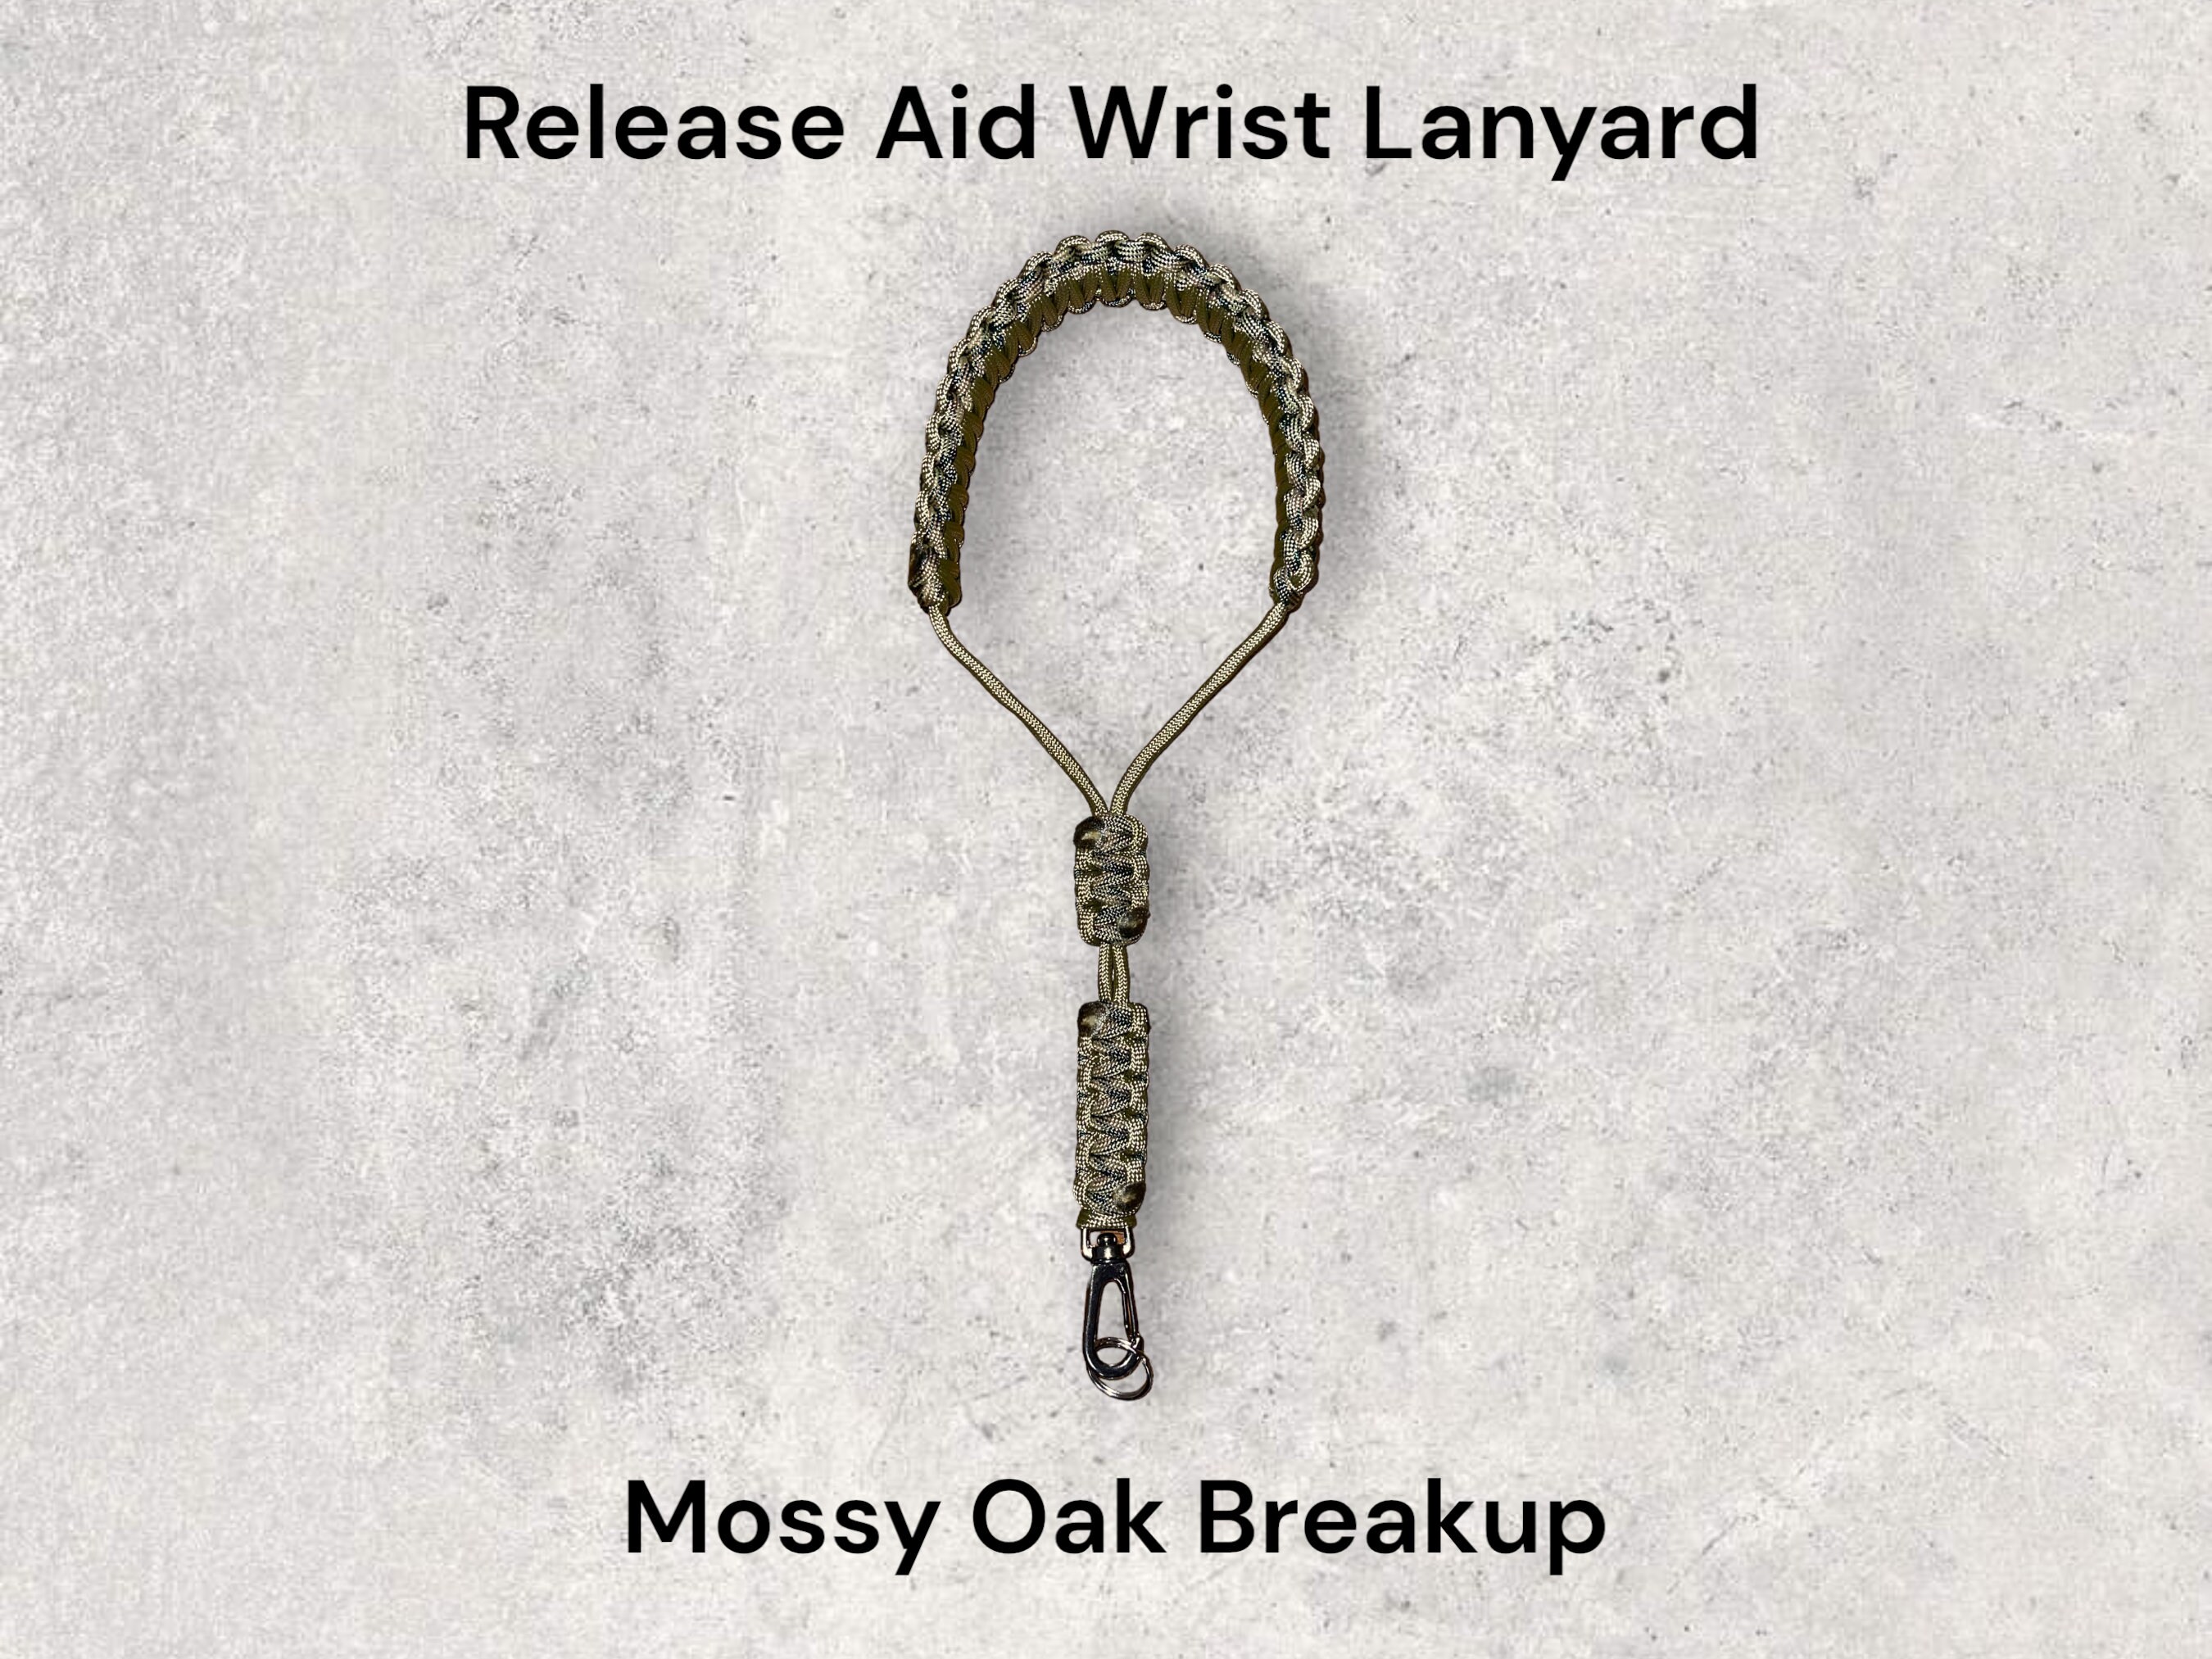 Mossy Oak Break-Up Infinity Camo Vinyl Roll - Outdoor Adhesive Camo Vinyl  Wrap - Vinyl Sheets by Mossy Oak Graphics